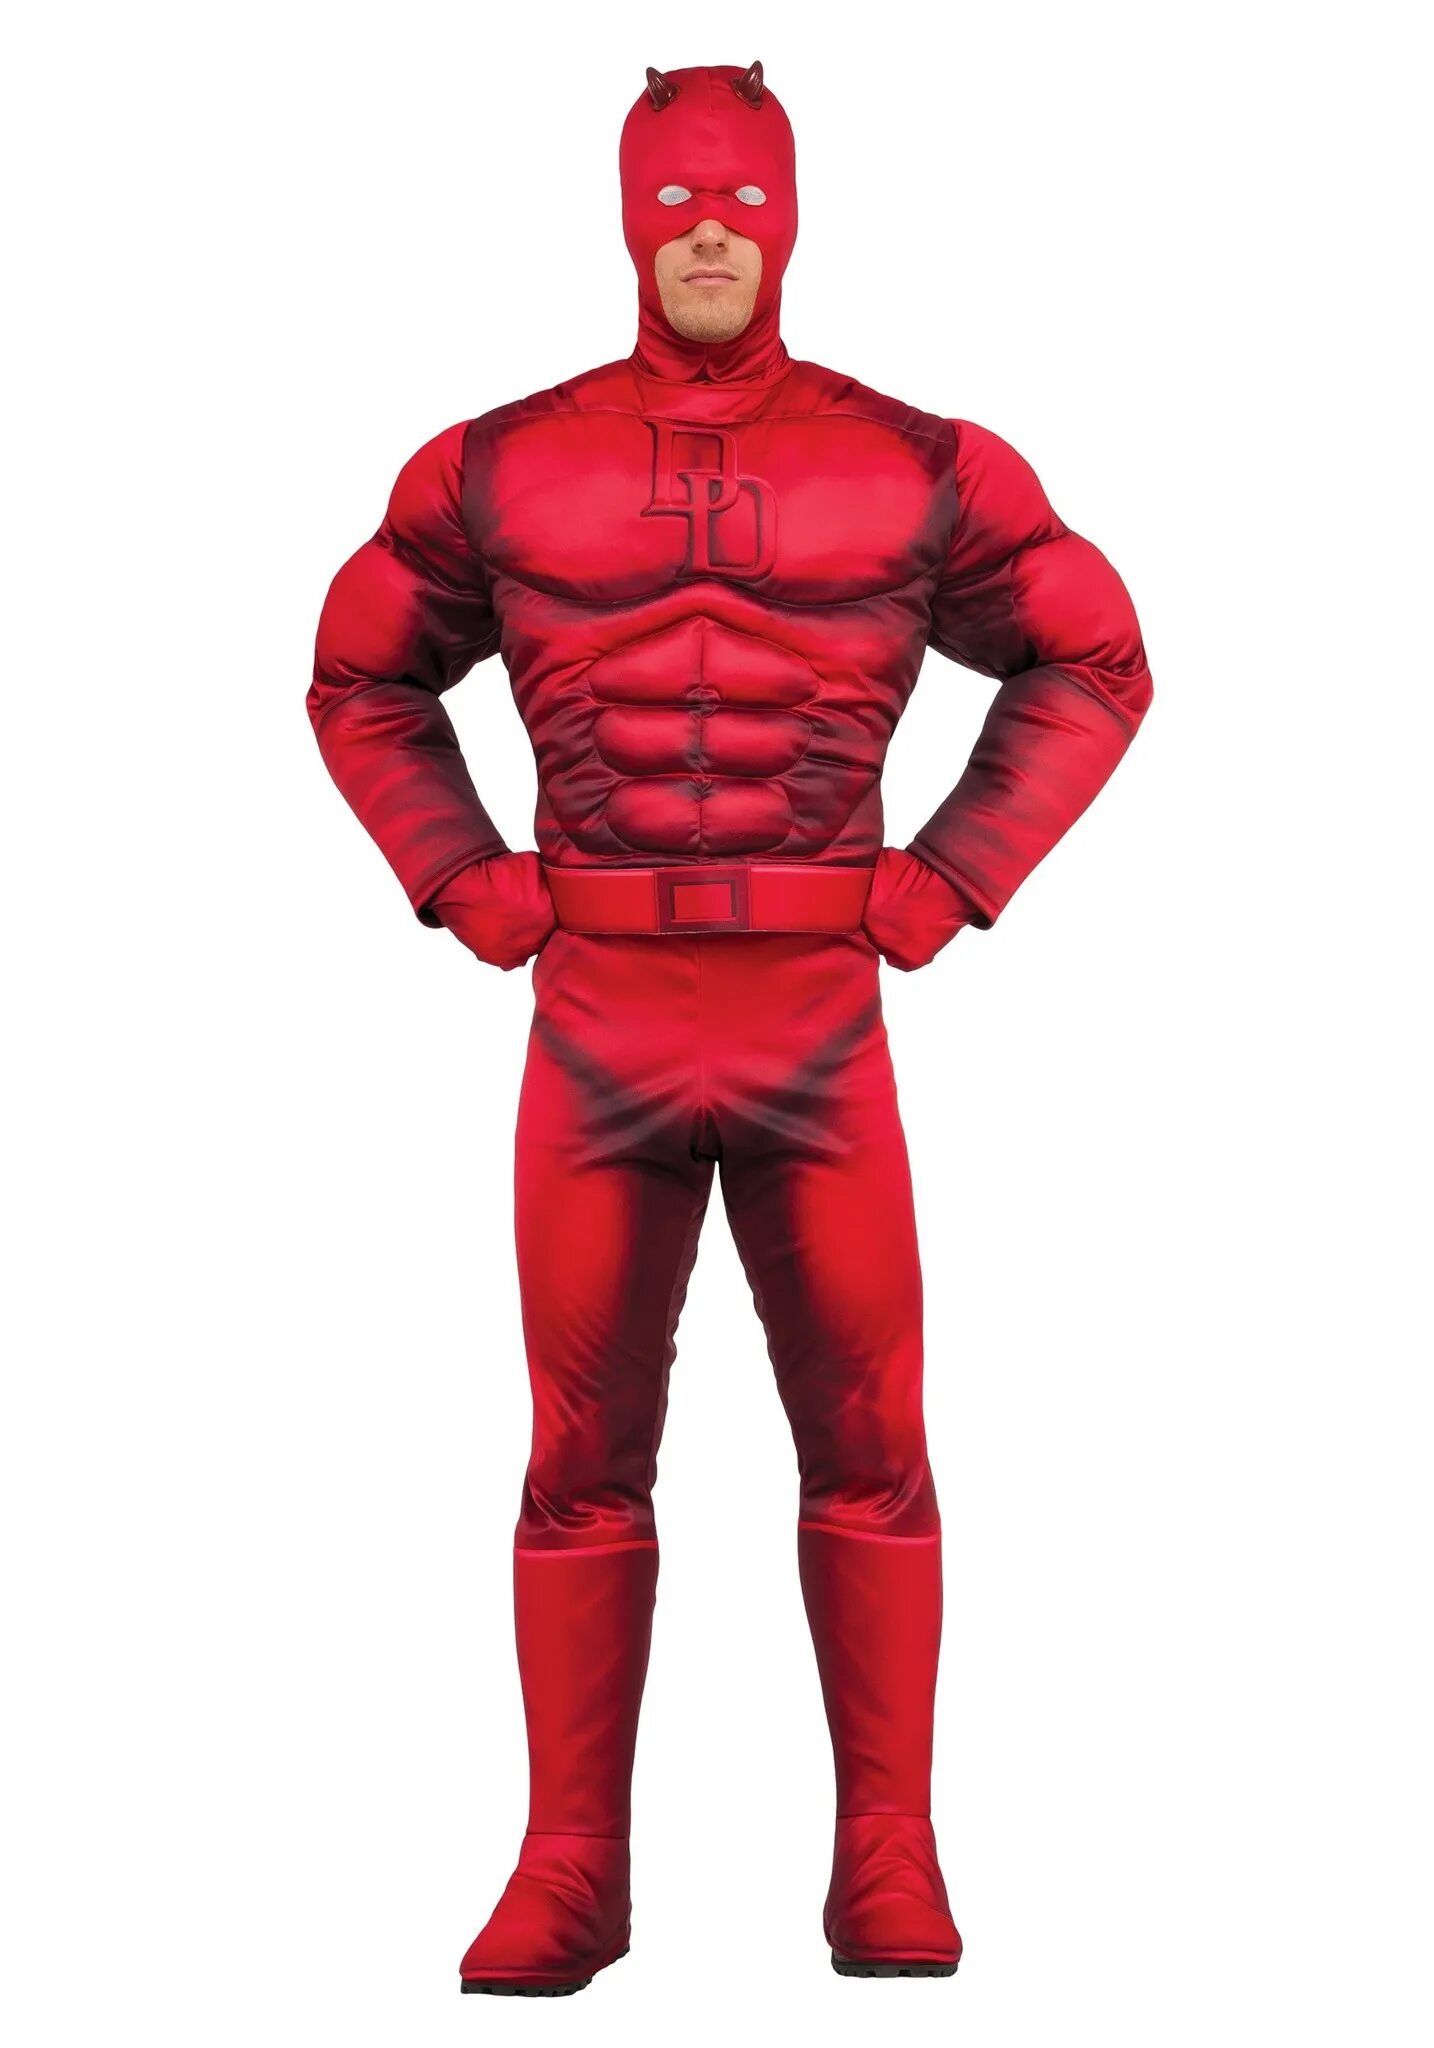 Сорвиголова костюм. Сорвиголова 1 костюм. Сорвиголова Марвел костюм. Сорвиголова красный костюм. Красный костюм и маска